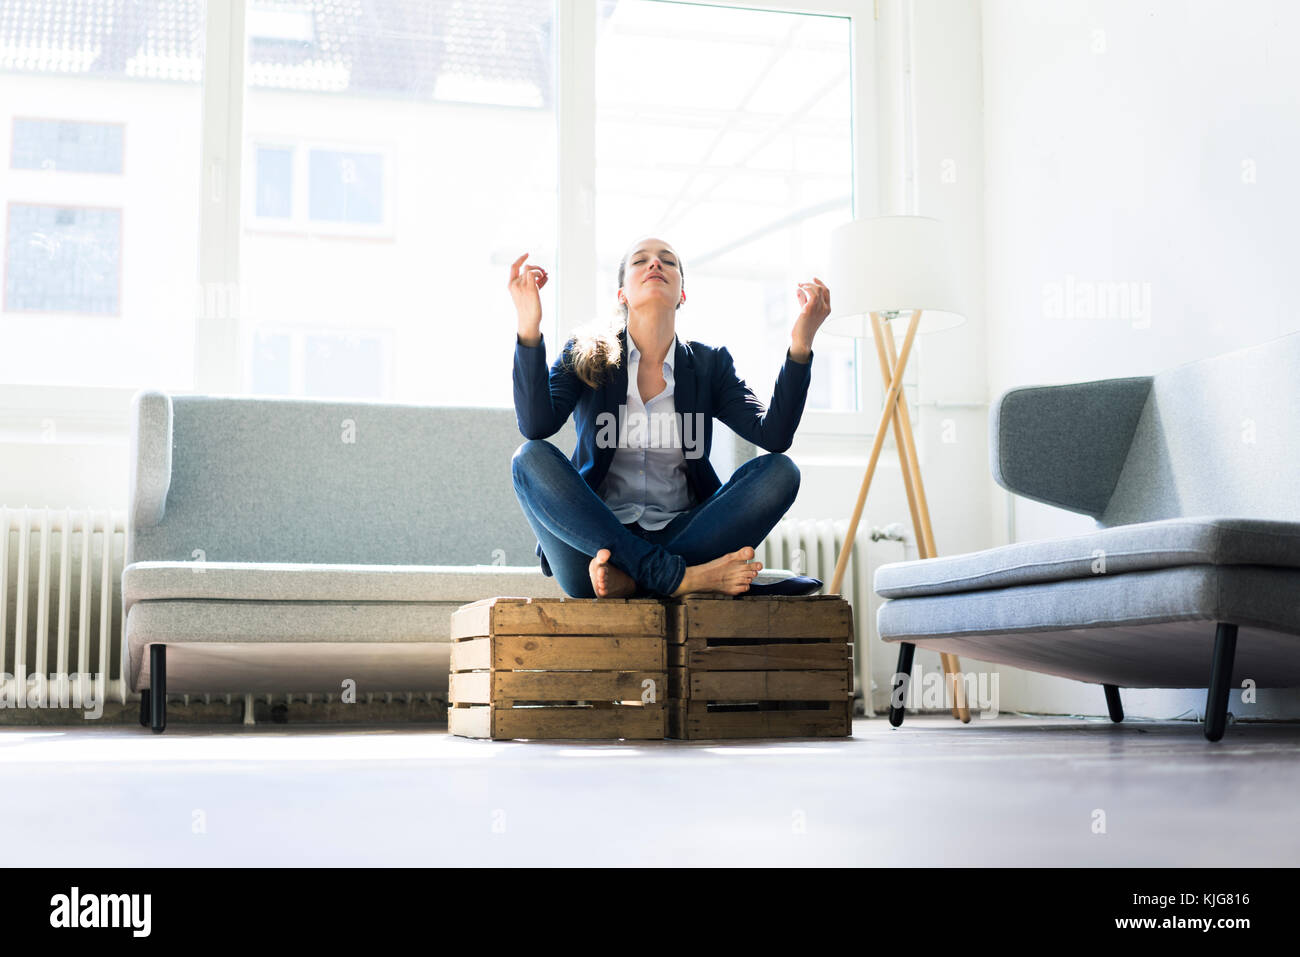 Businesswoman sitting on crate practising yoga Stock Photo